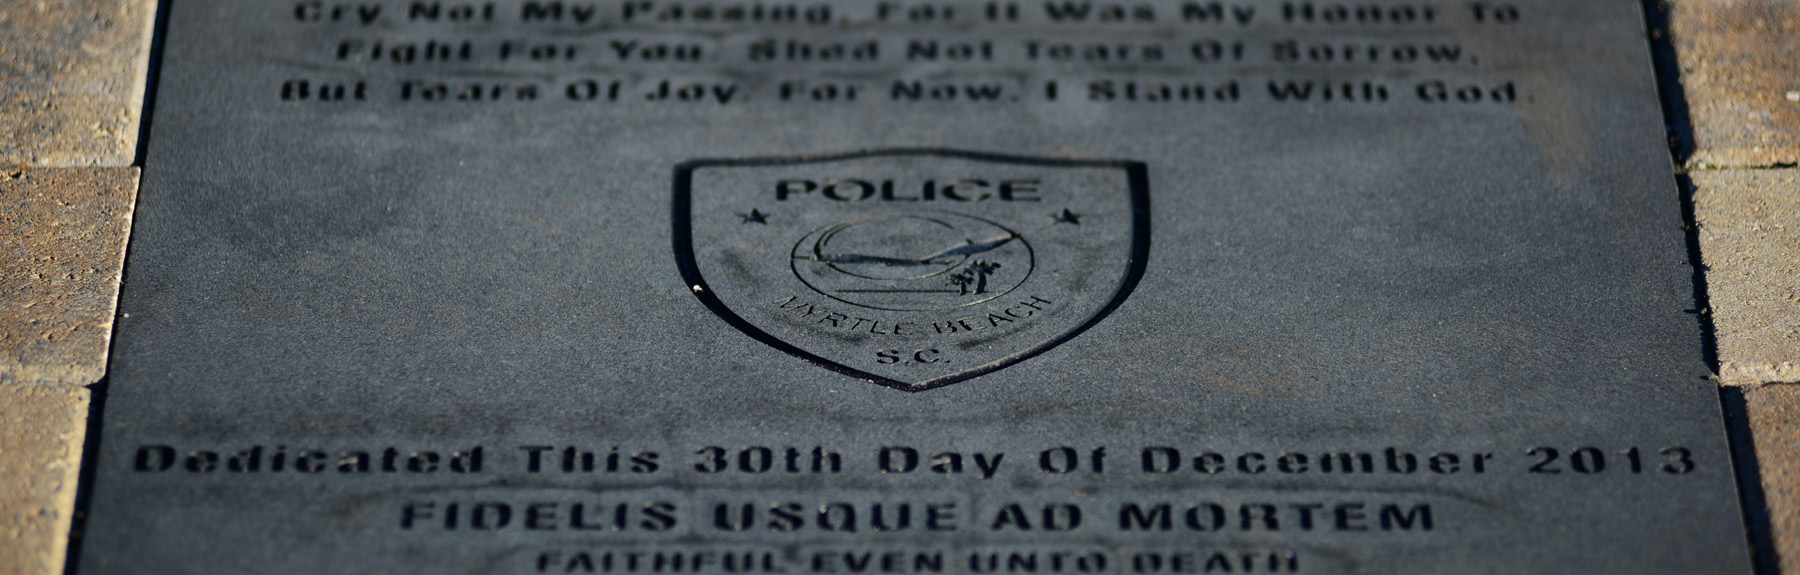 Fallen Officer Memorial Fountain